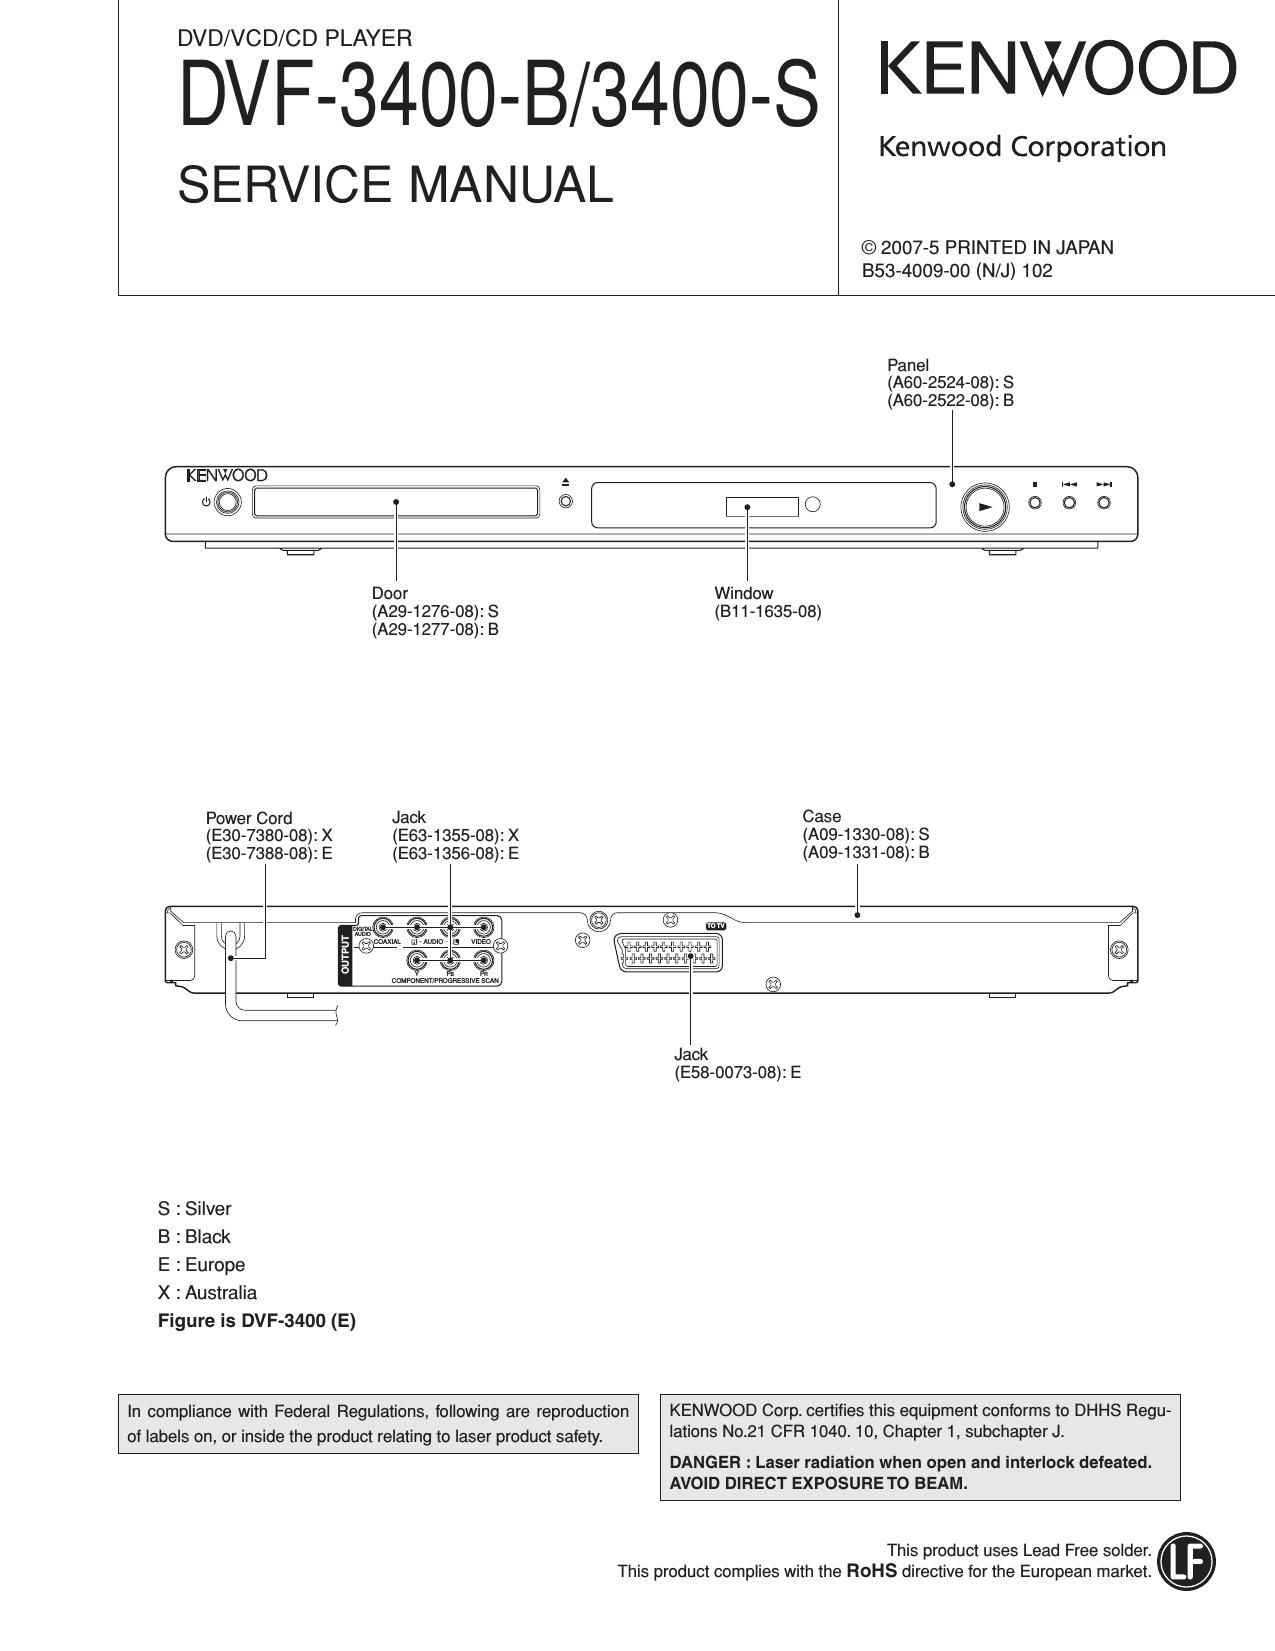 Kenwood DVF 3400 S Service Manual